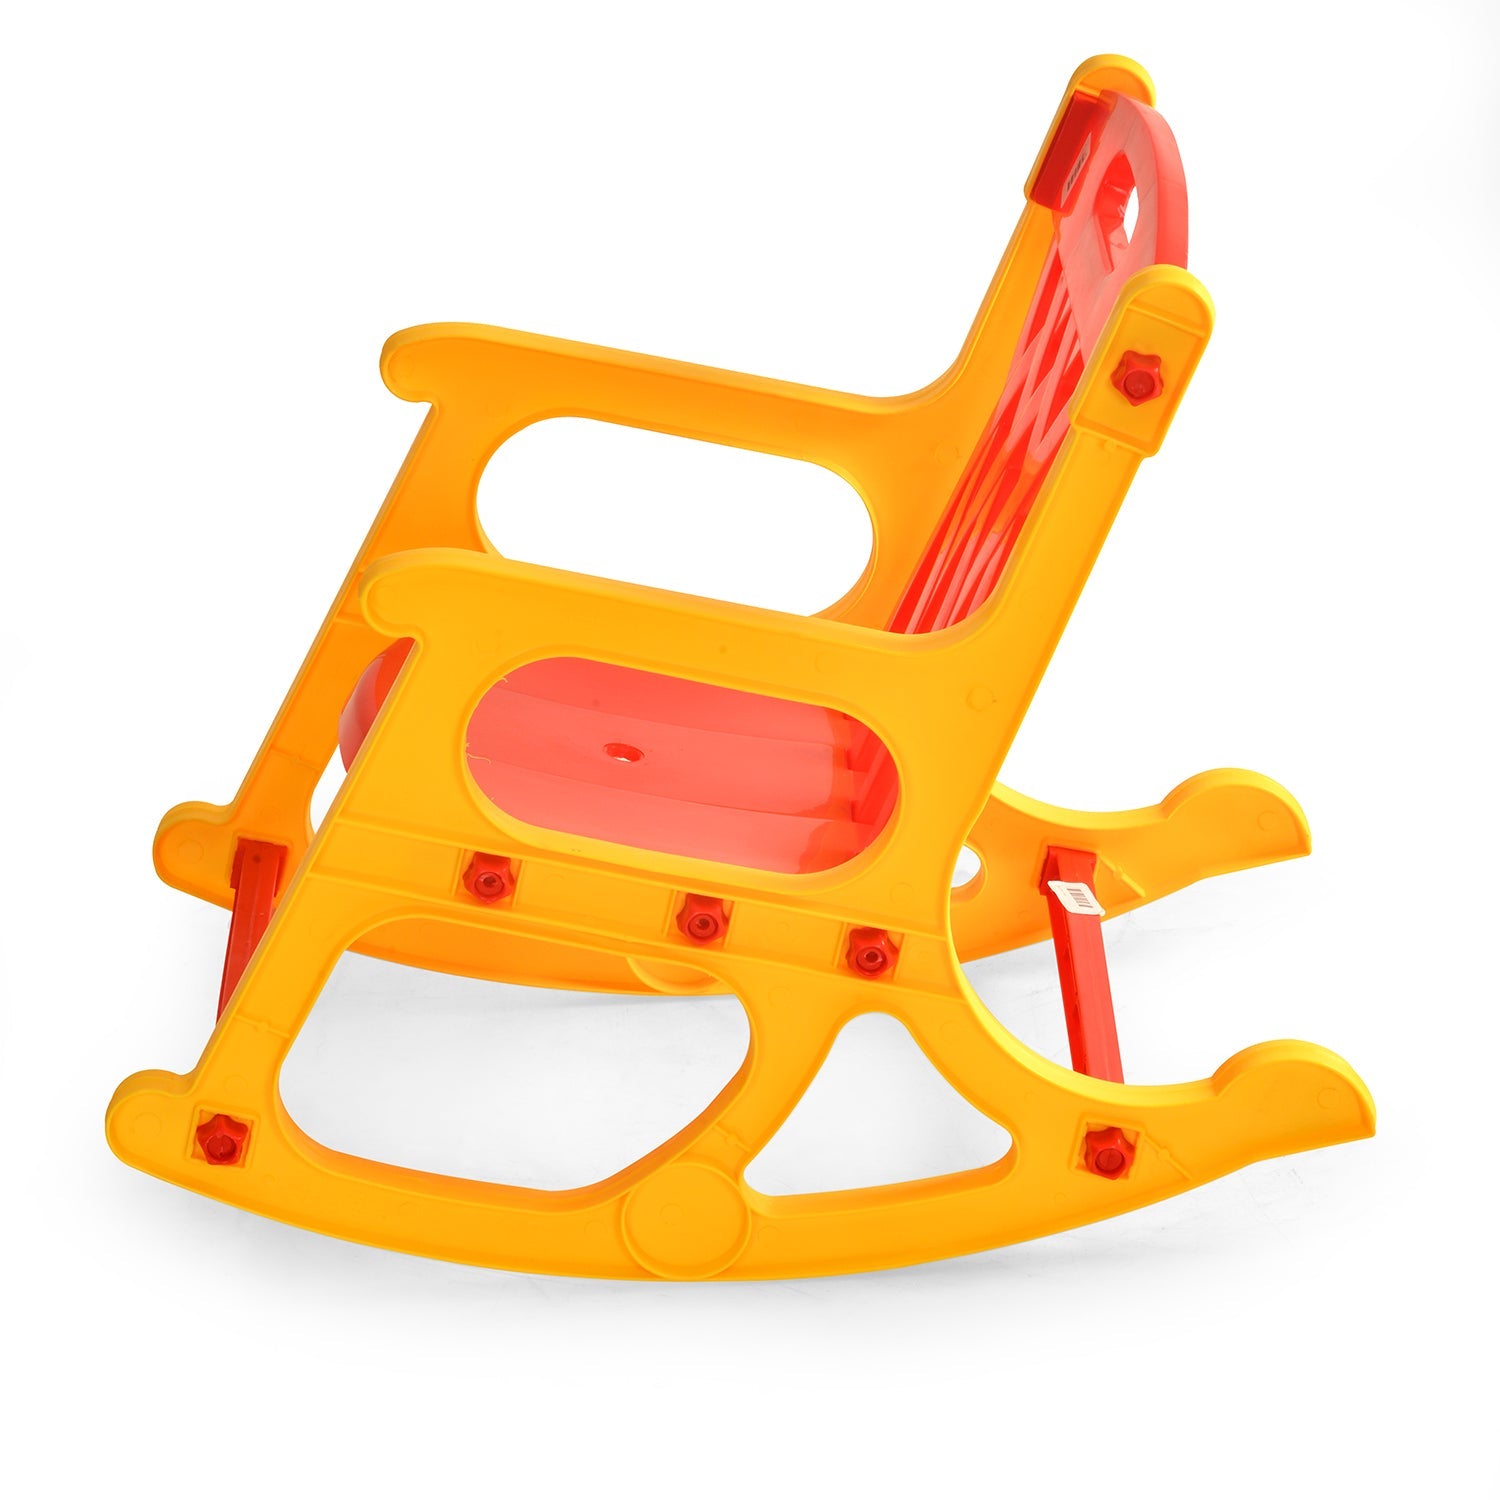 Nilkamal Toy Rocker Kids Chair (Red/Yellow)